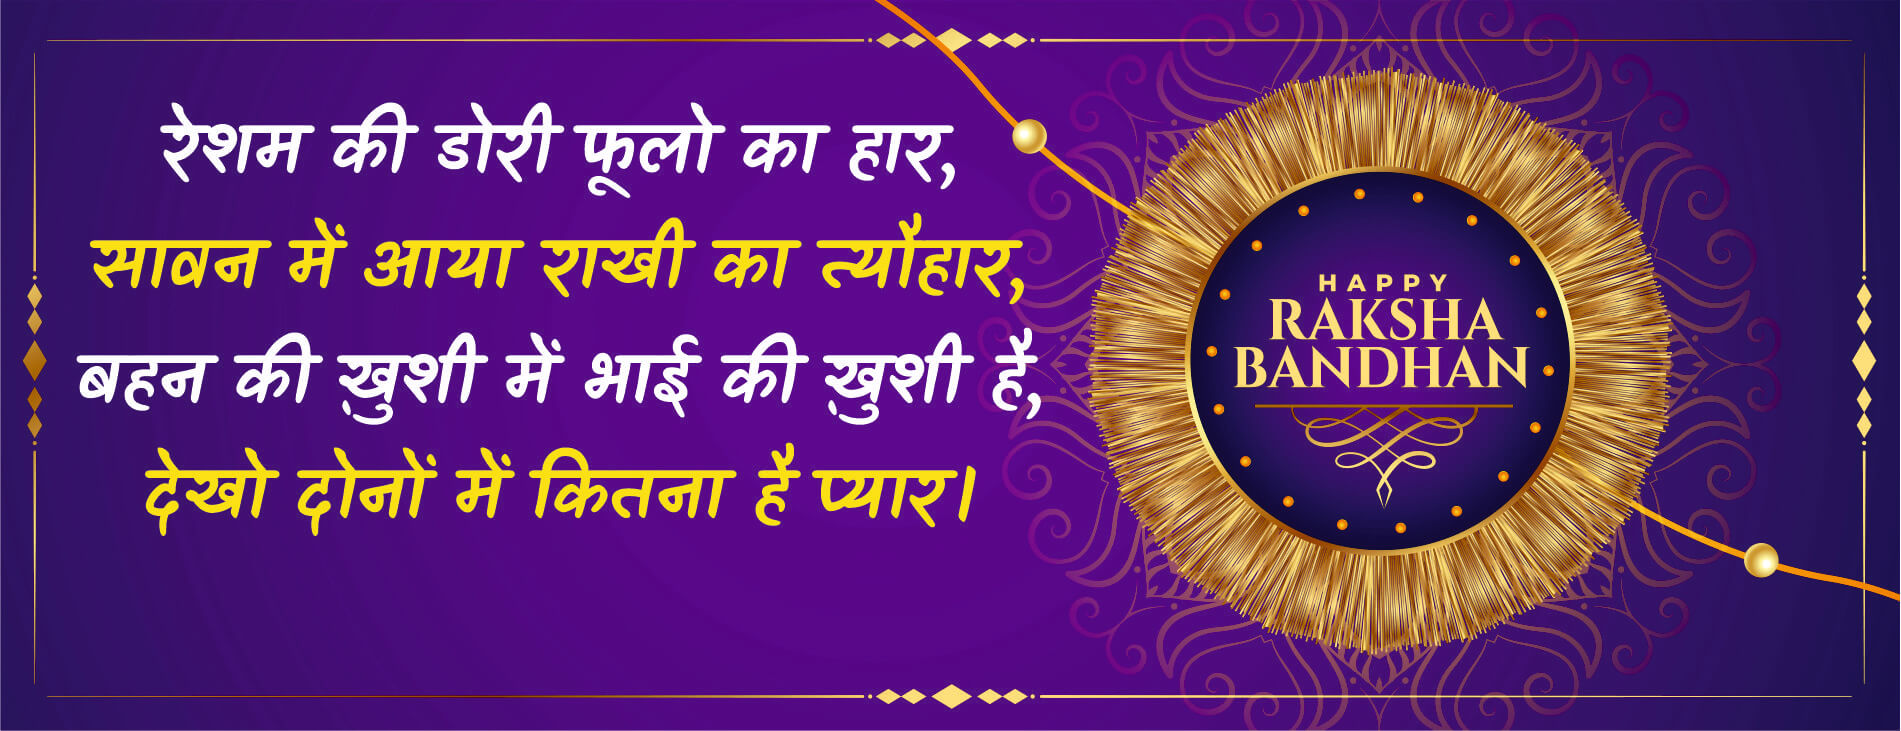 happy raksha bandhan images with quotes in hindi